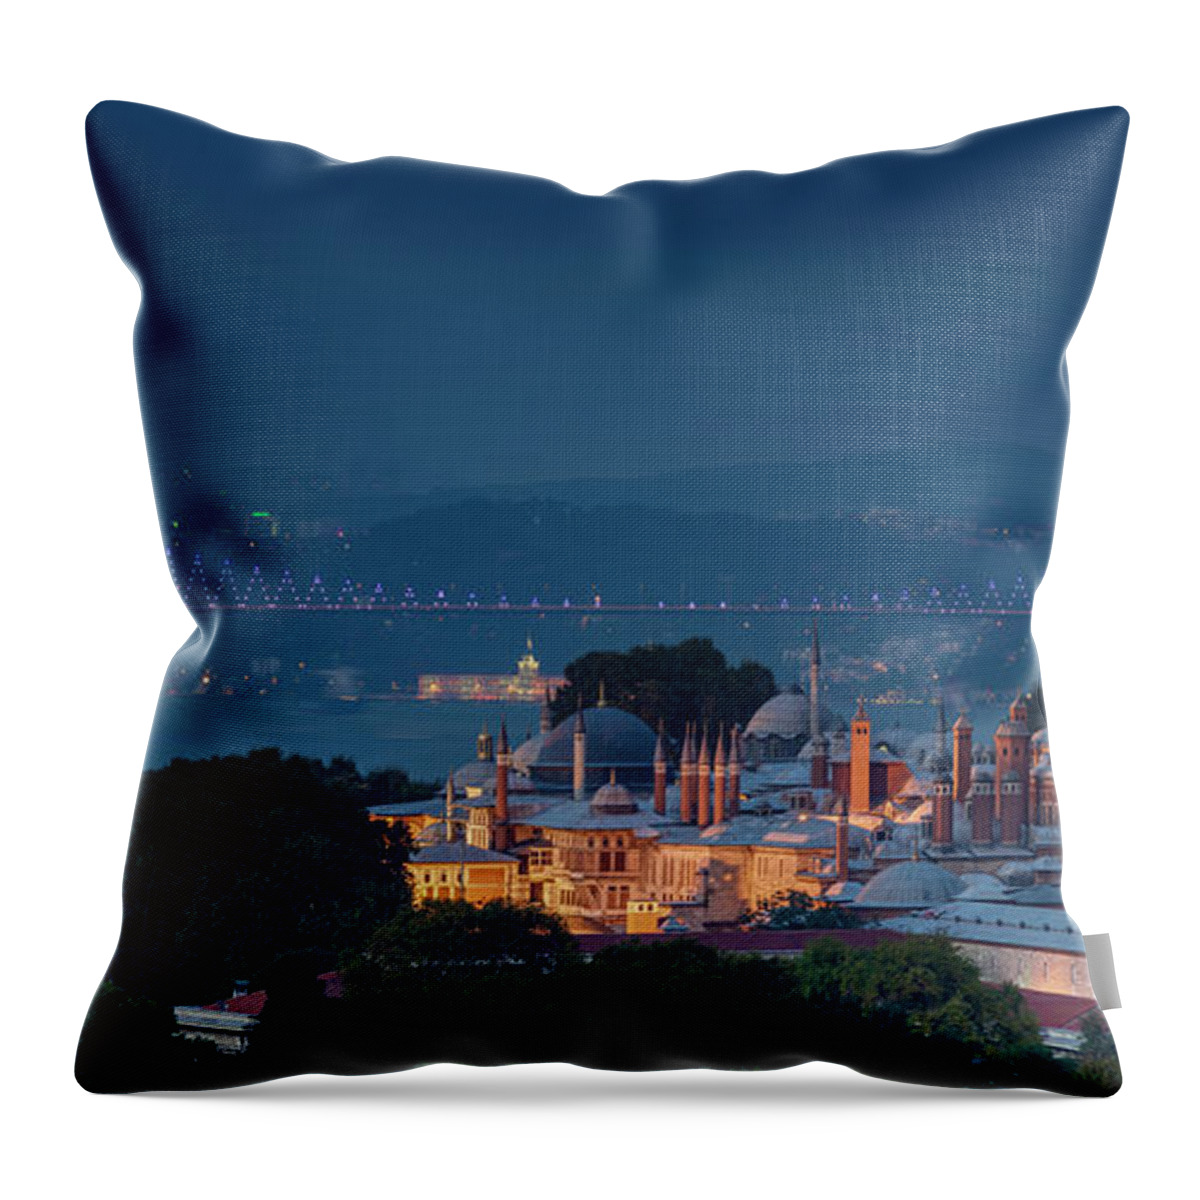 Scenics Throw Pillow featuring the photograph Topkapi Palace And Bosphorus Bridge by Ayhan Altun